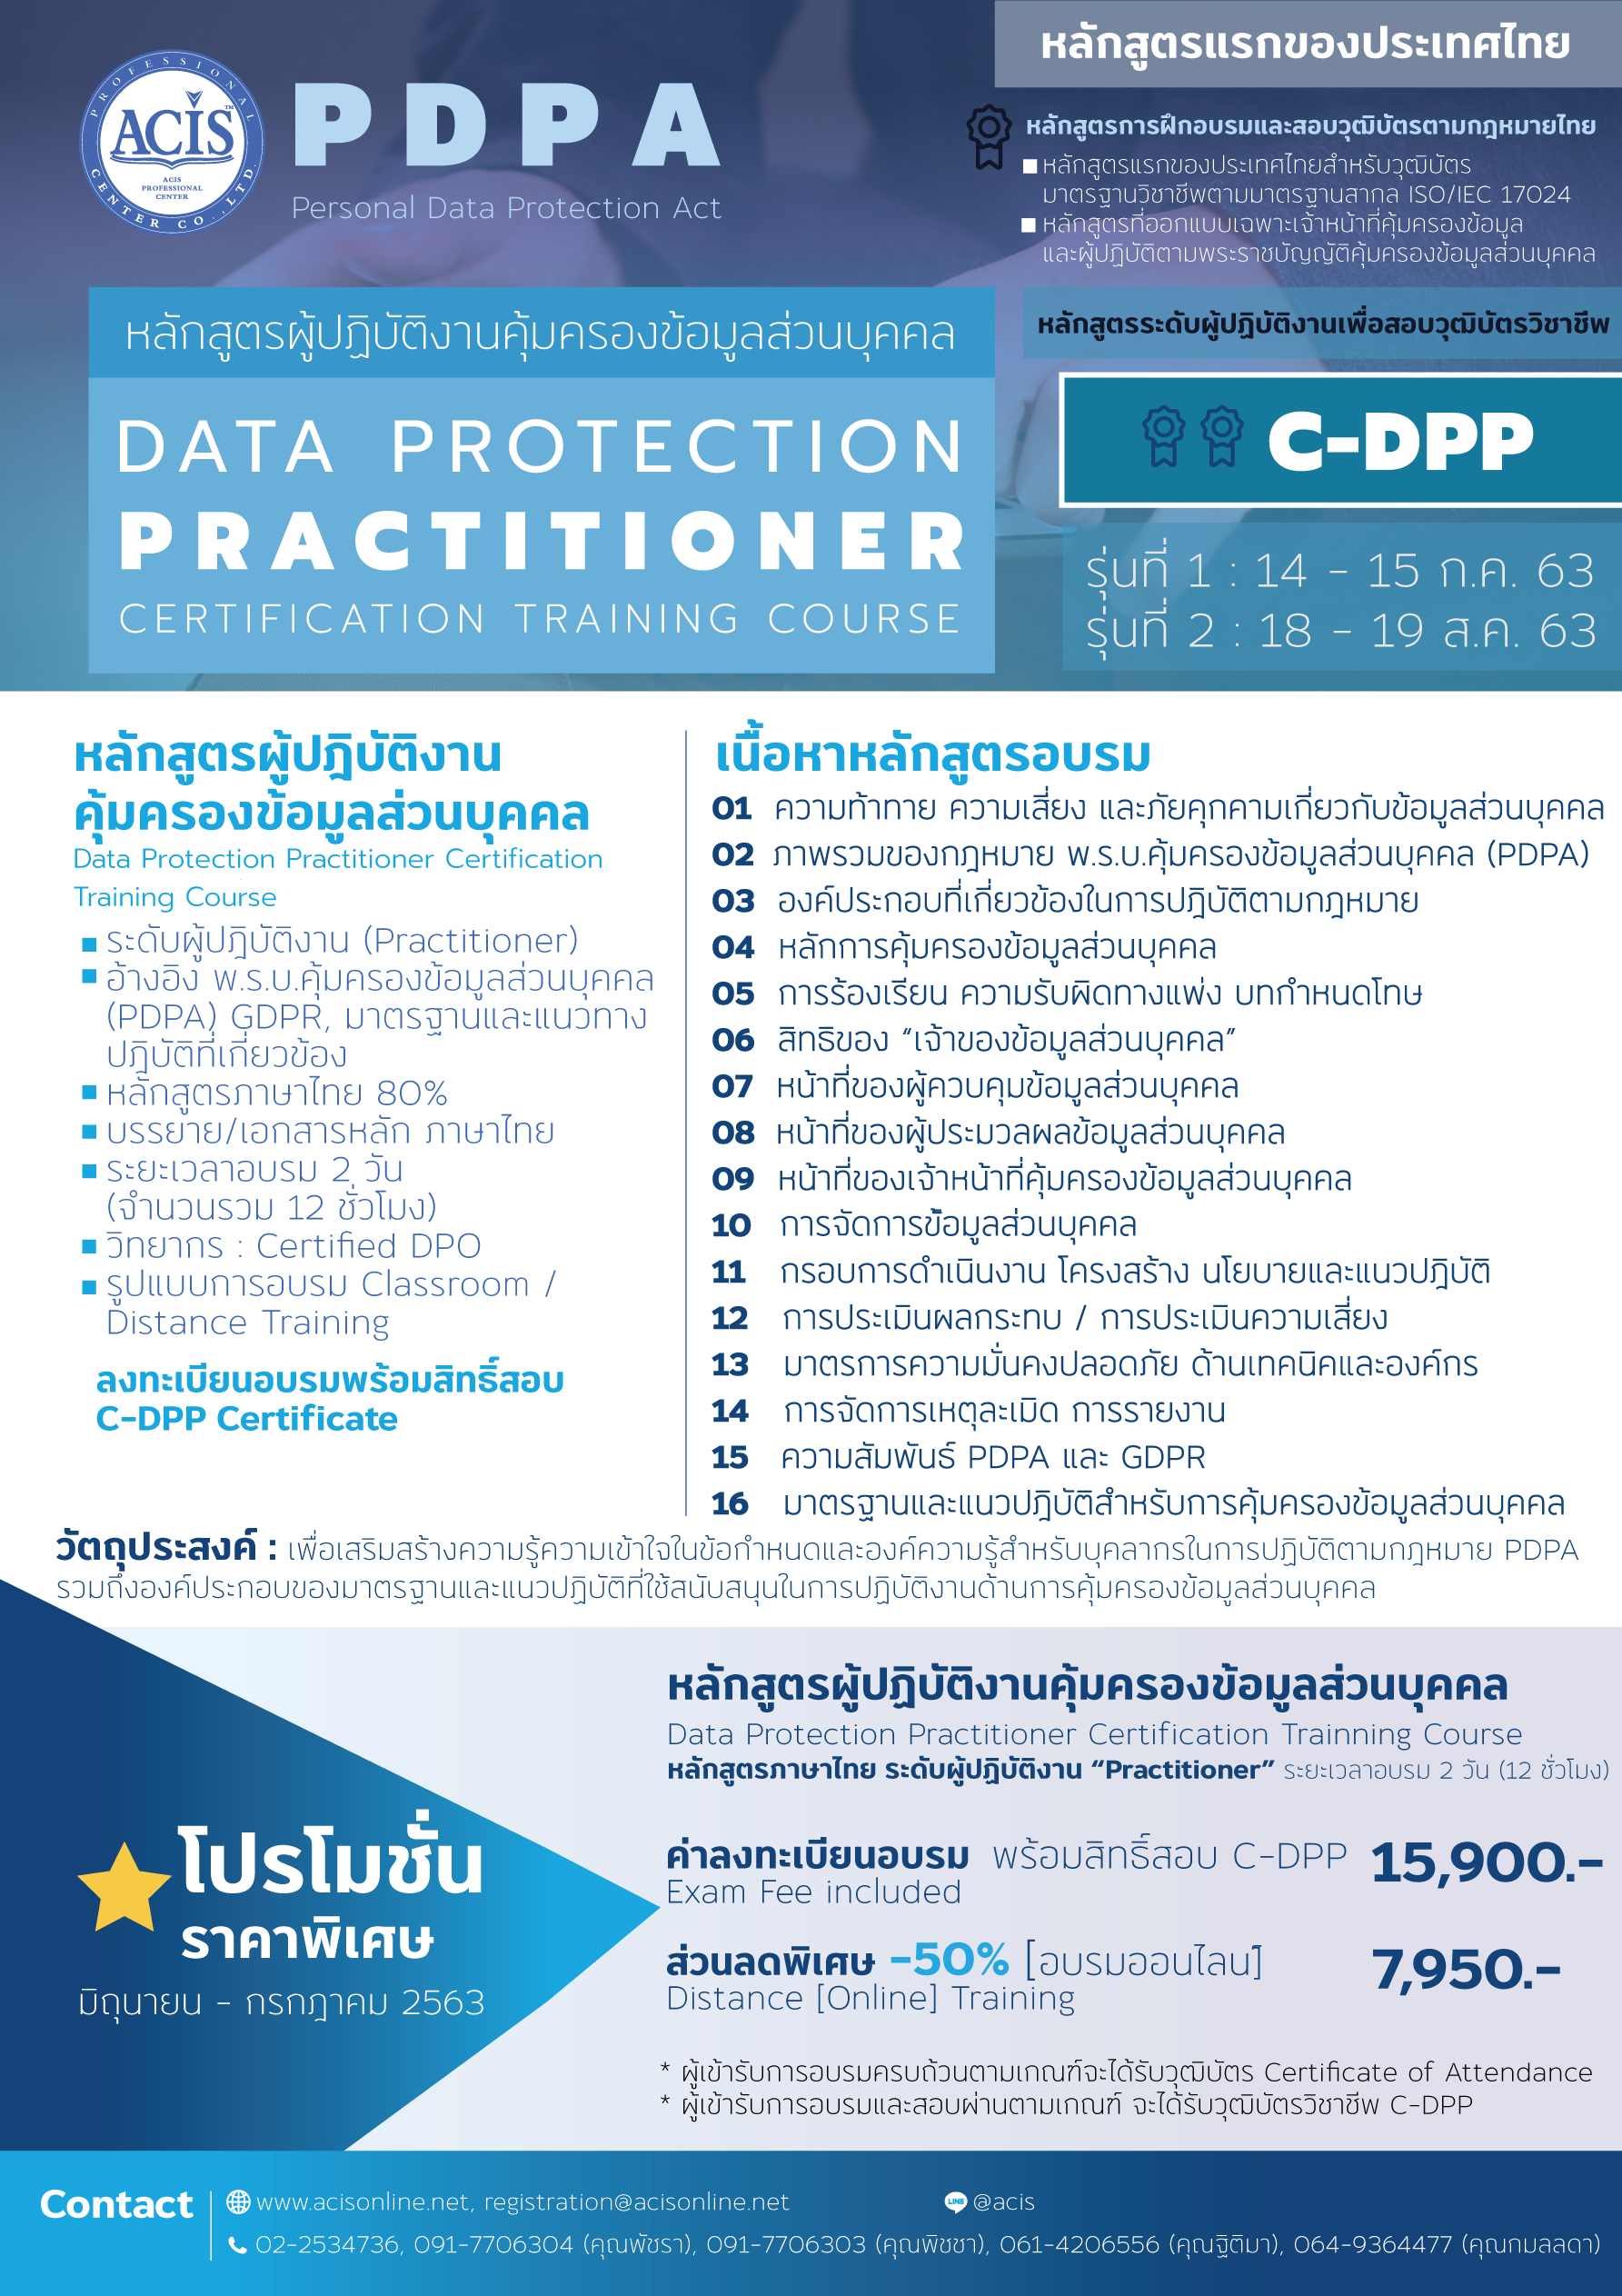 ACIS CDPP Promotion1